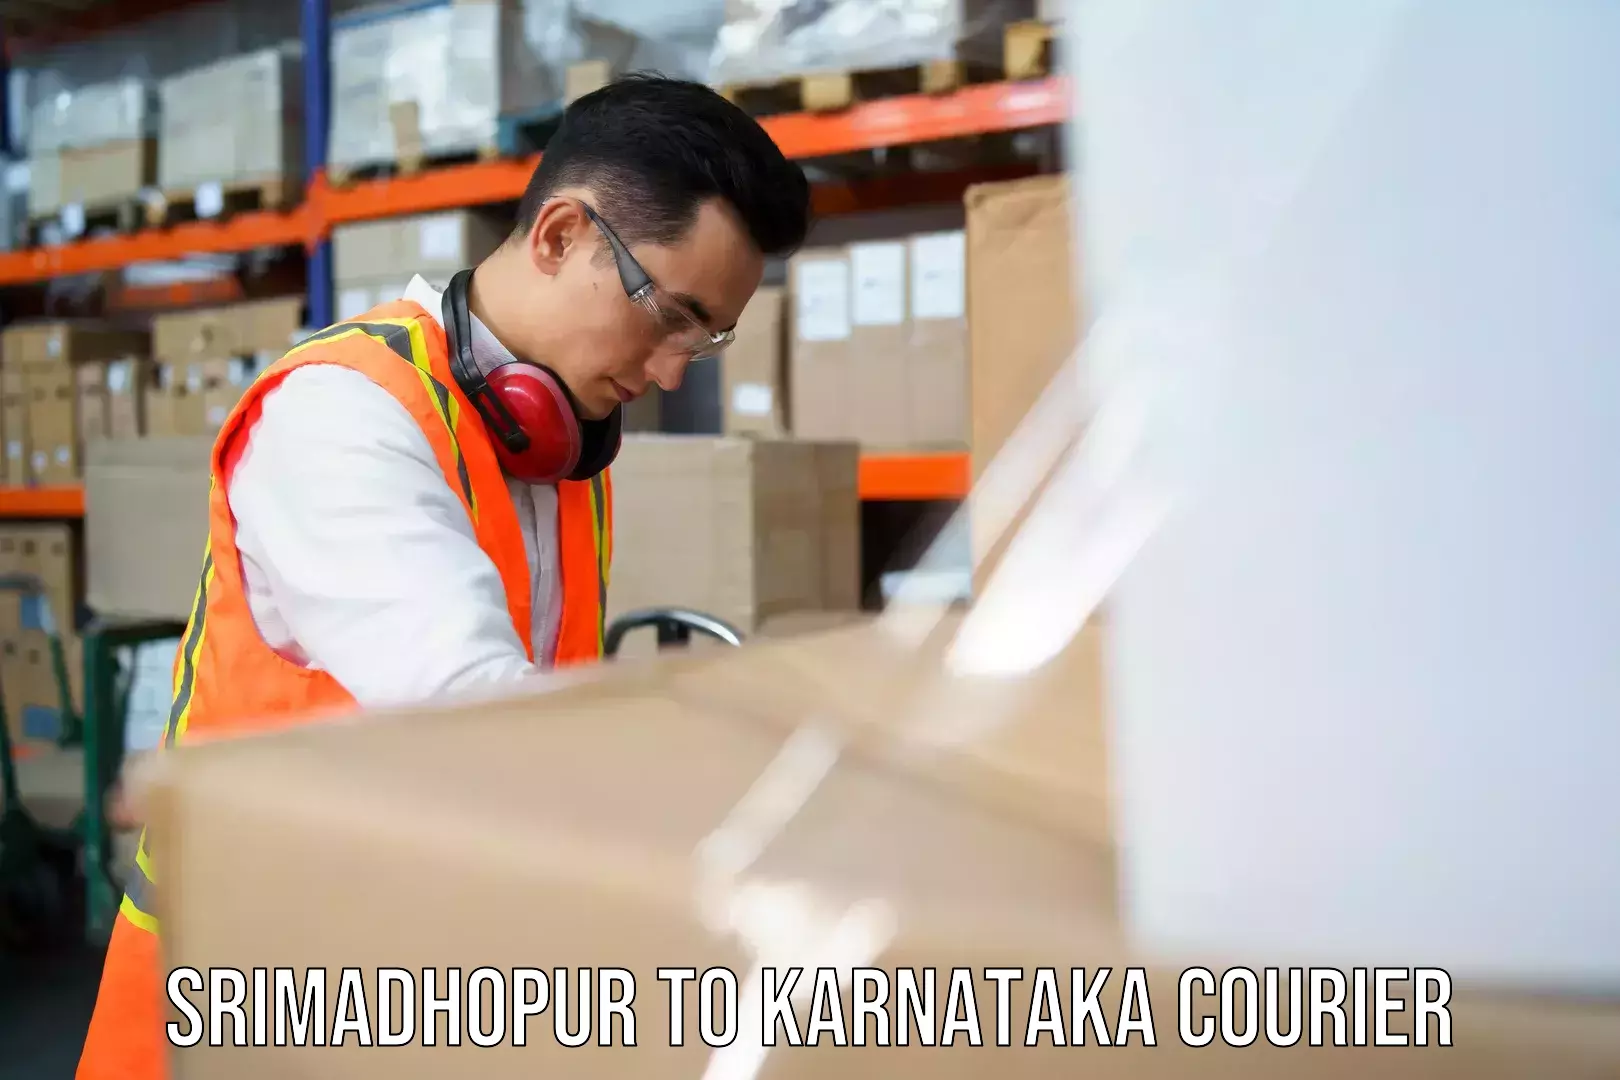 Efficient order fulfillment Srimadhopur to Karnataka